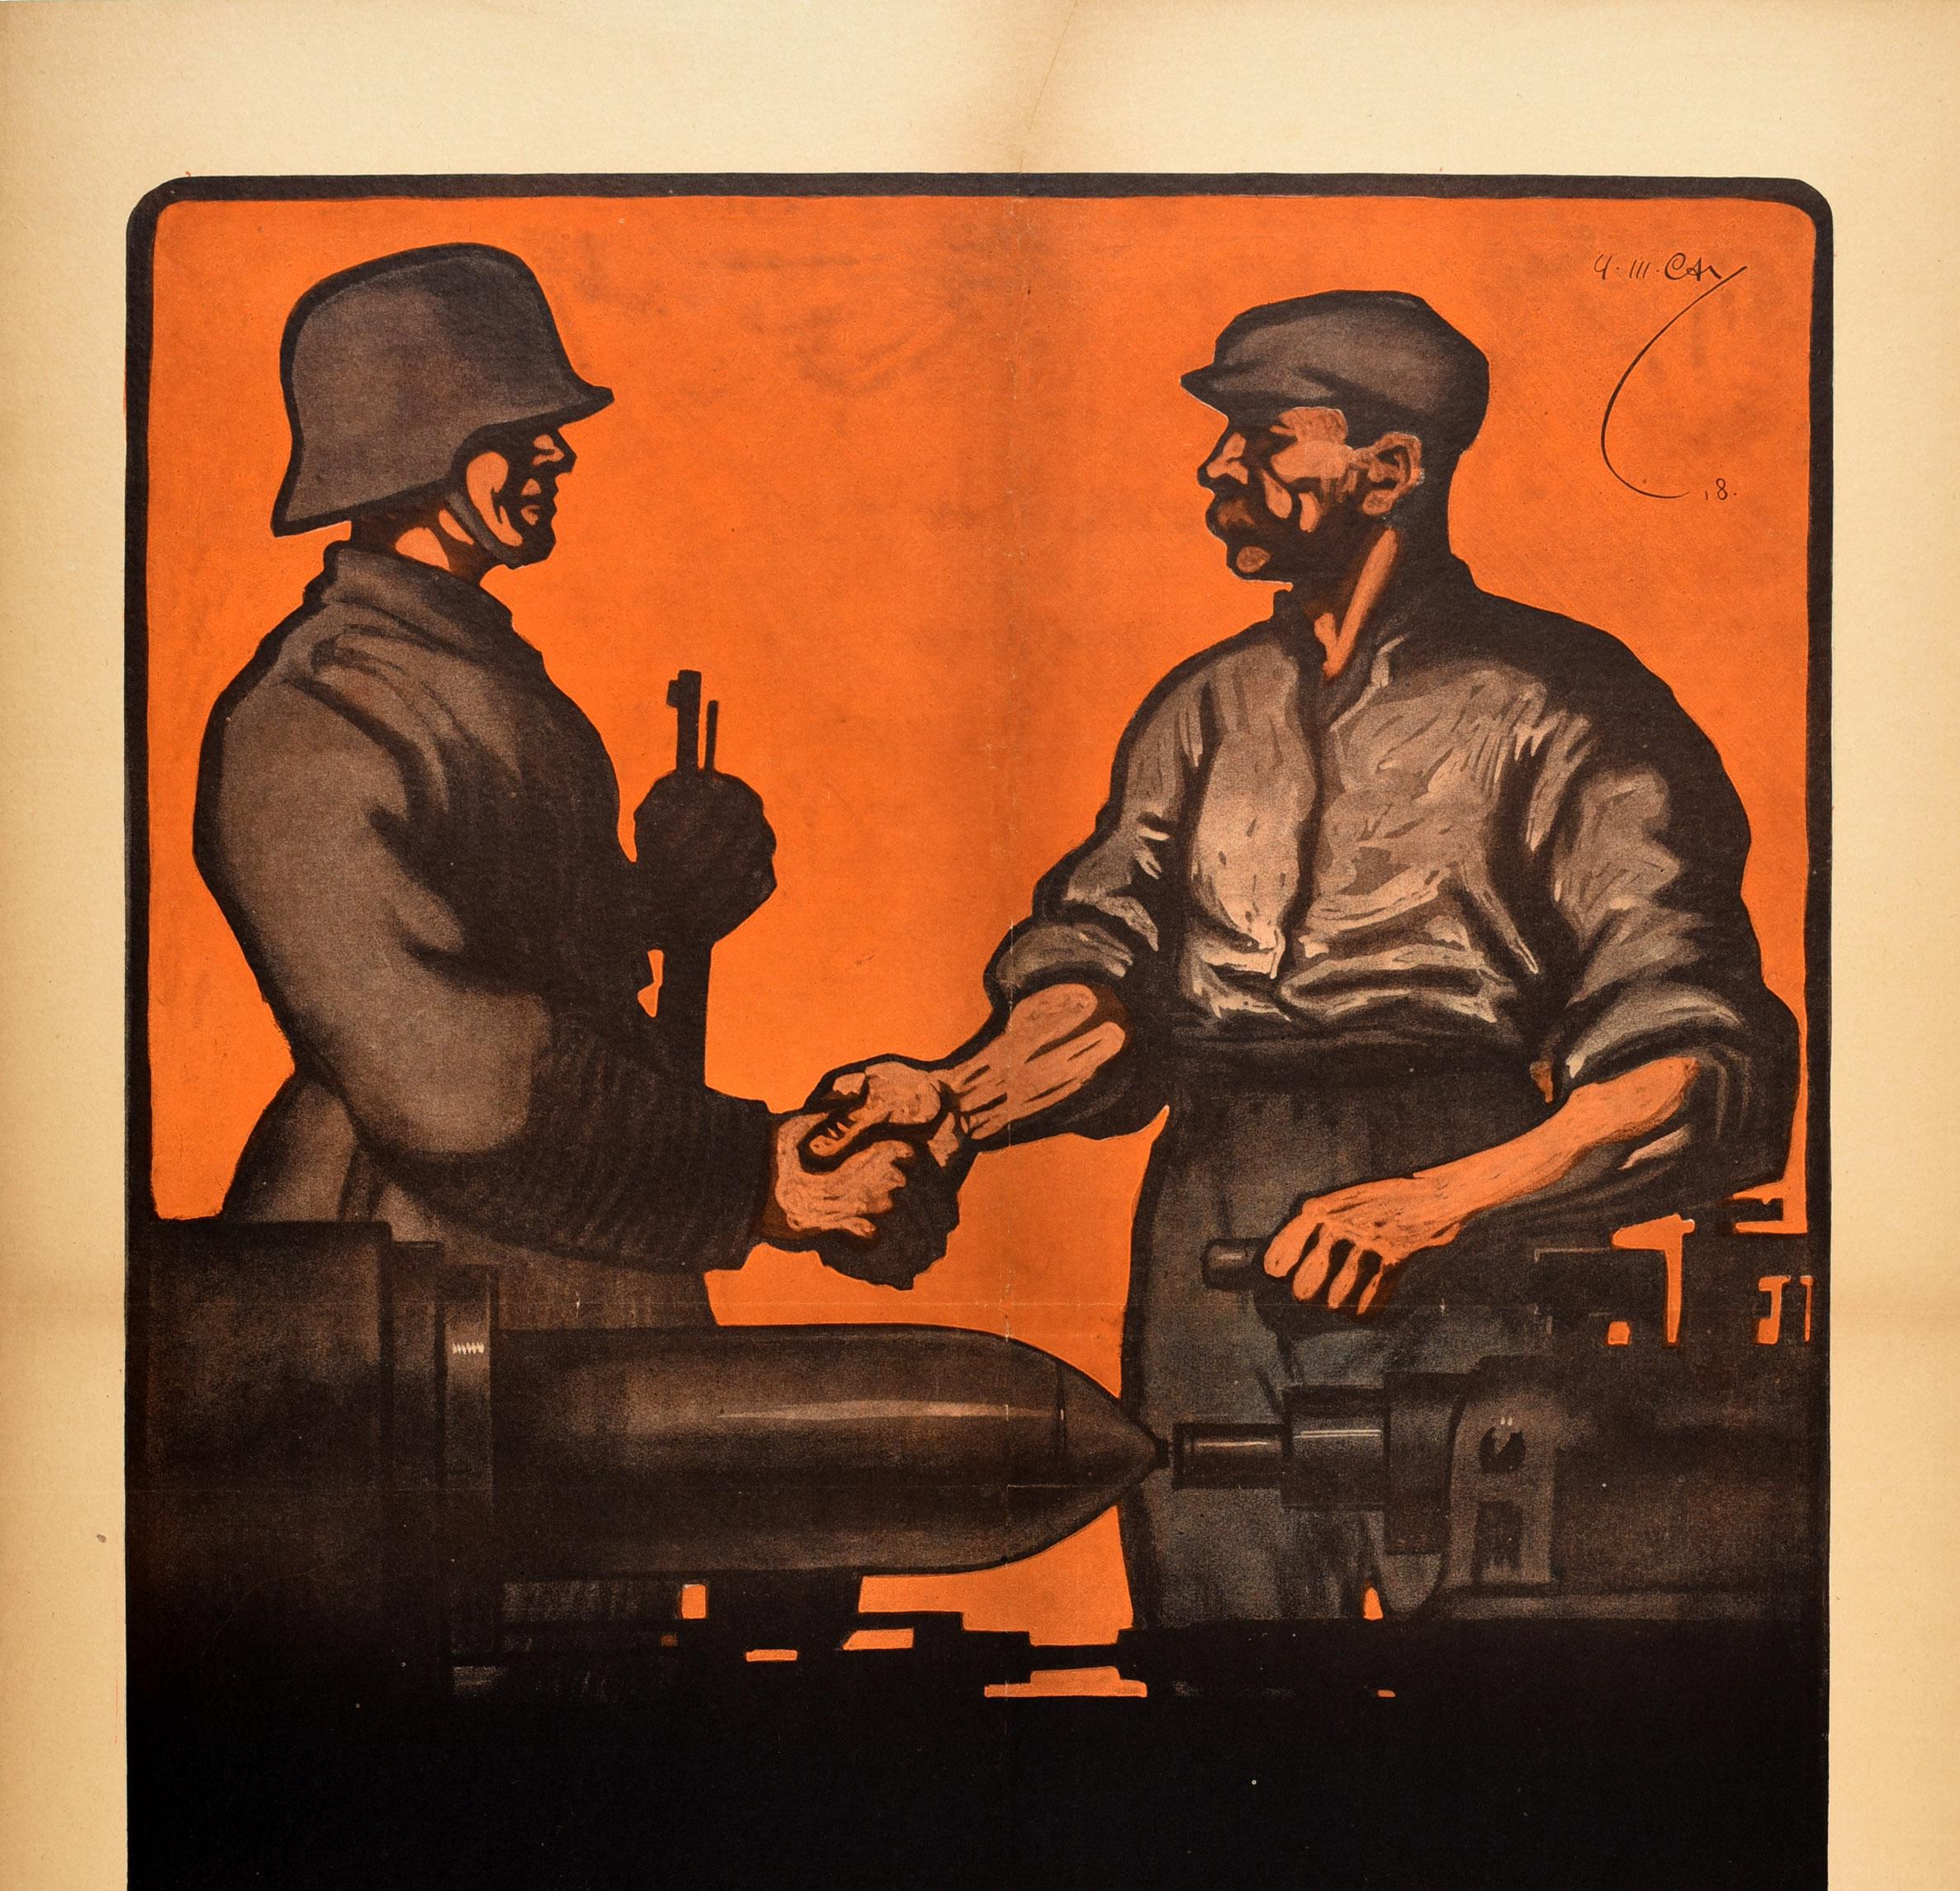 propaganda posters for war